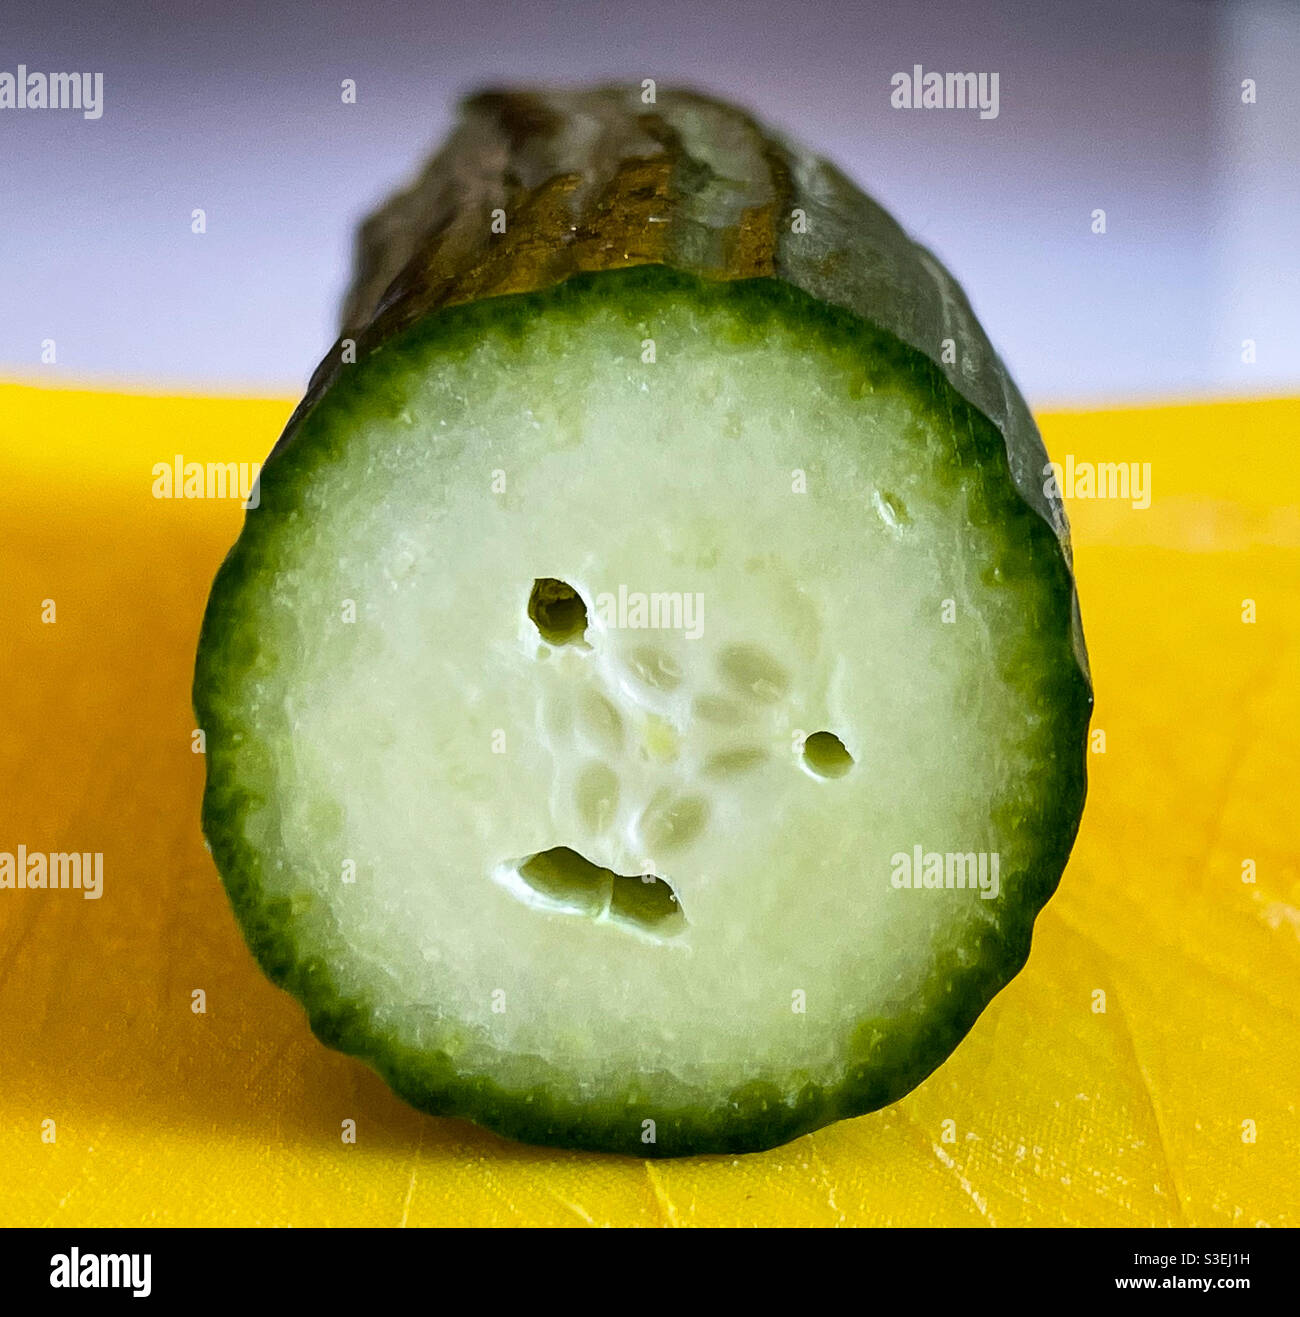 Sad Face Sliced Cucumber Stock Photo